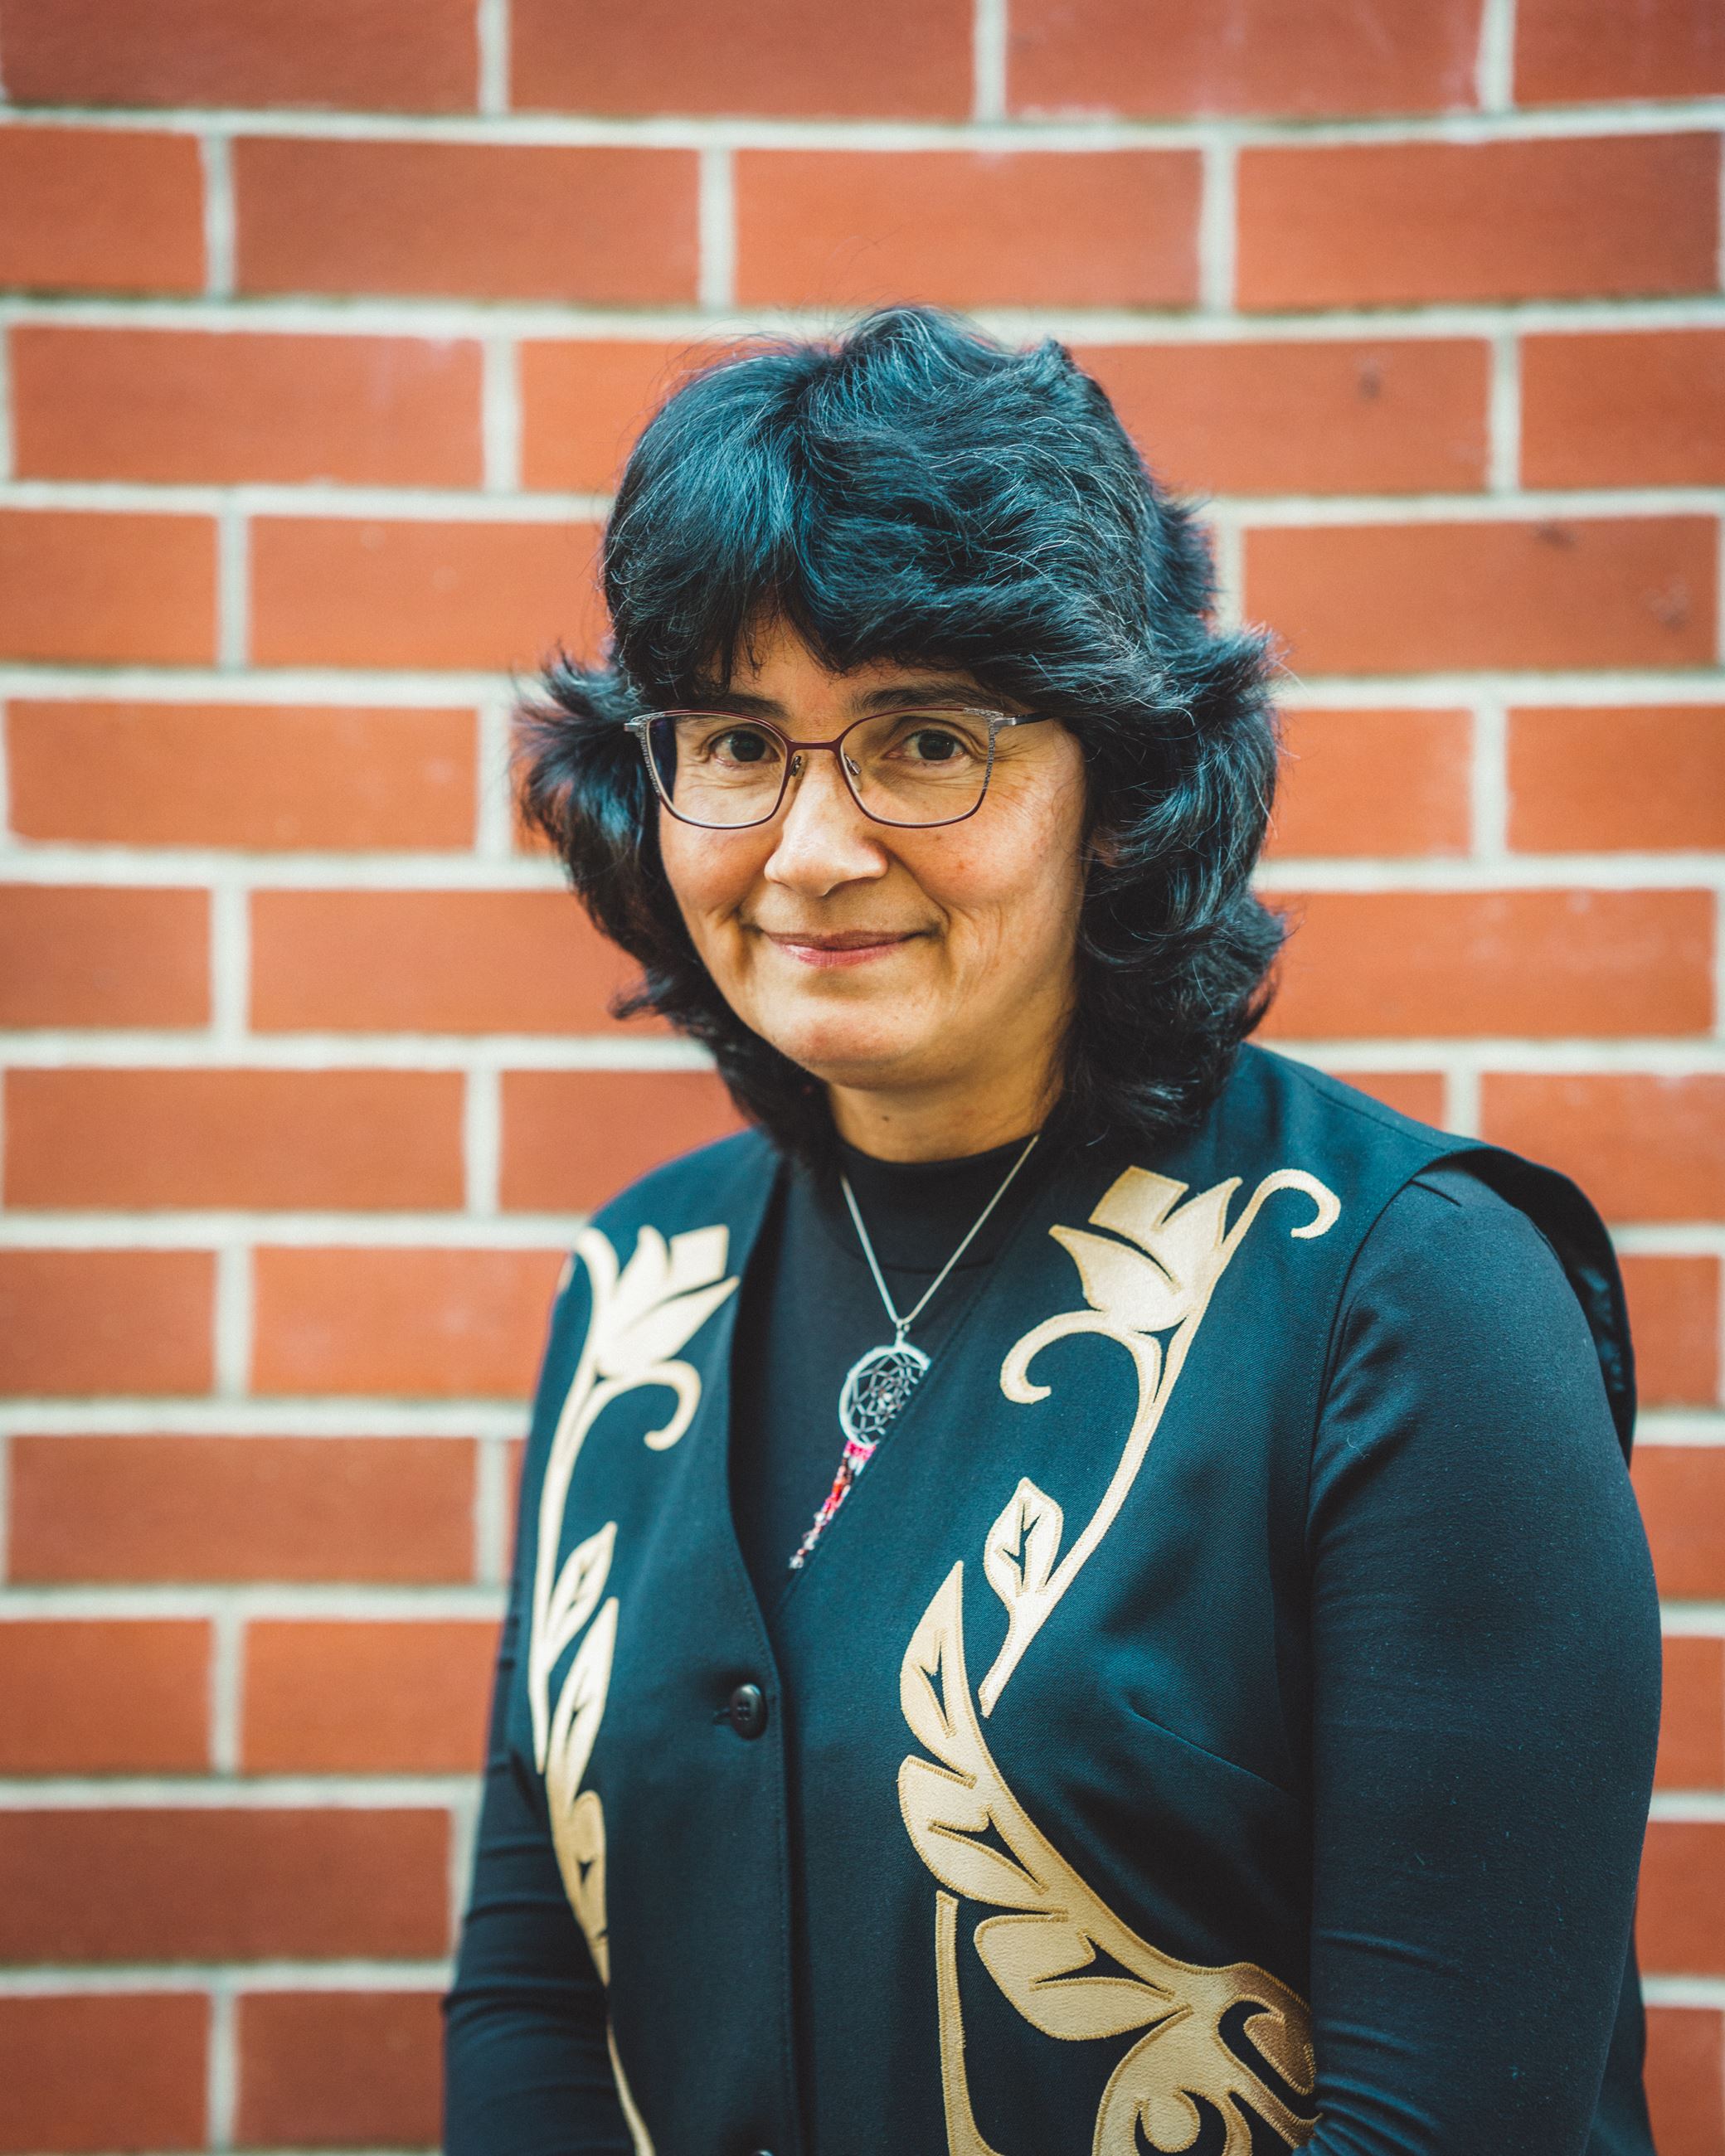 Debra Toporowski, Director, Municipality of North Cowichan